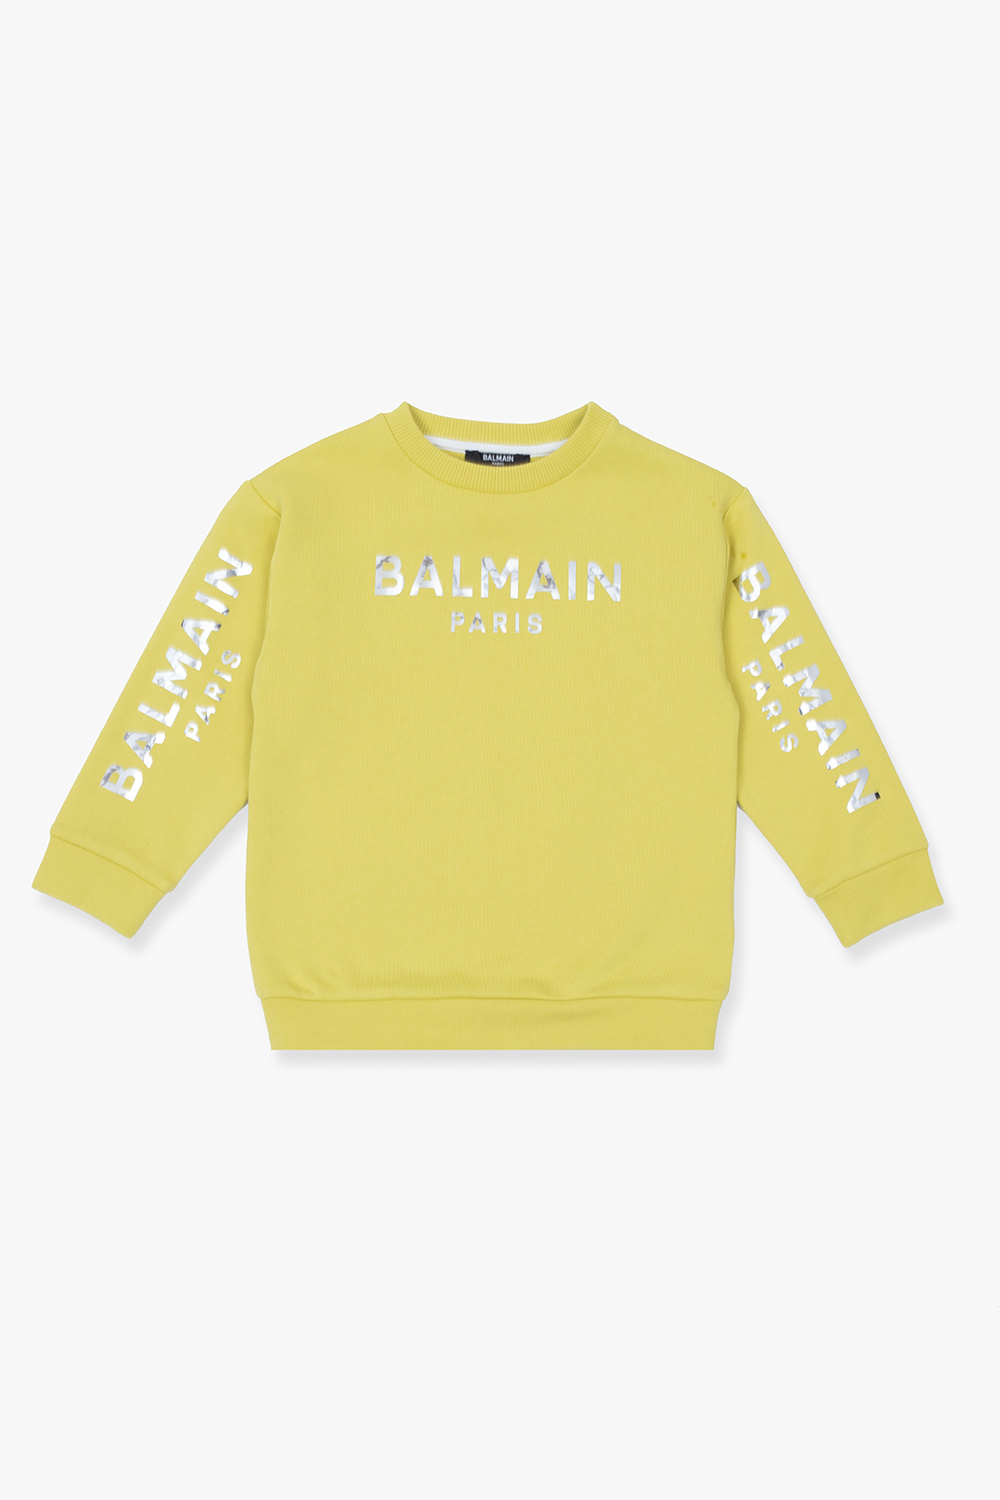 balmain Girls Kids Sweatshirt with logo